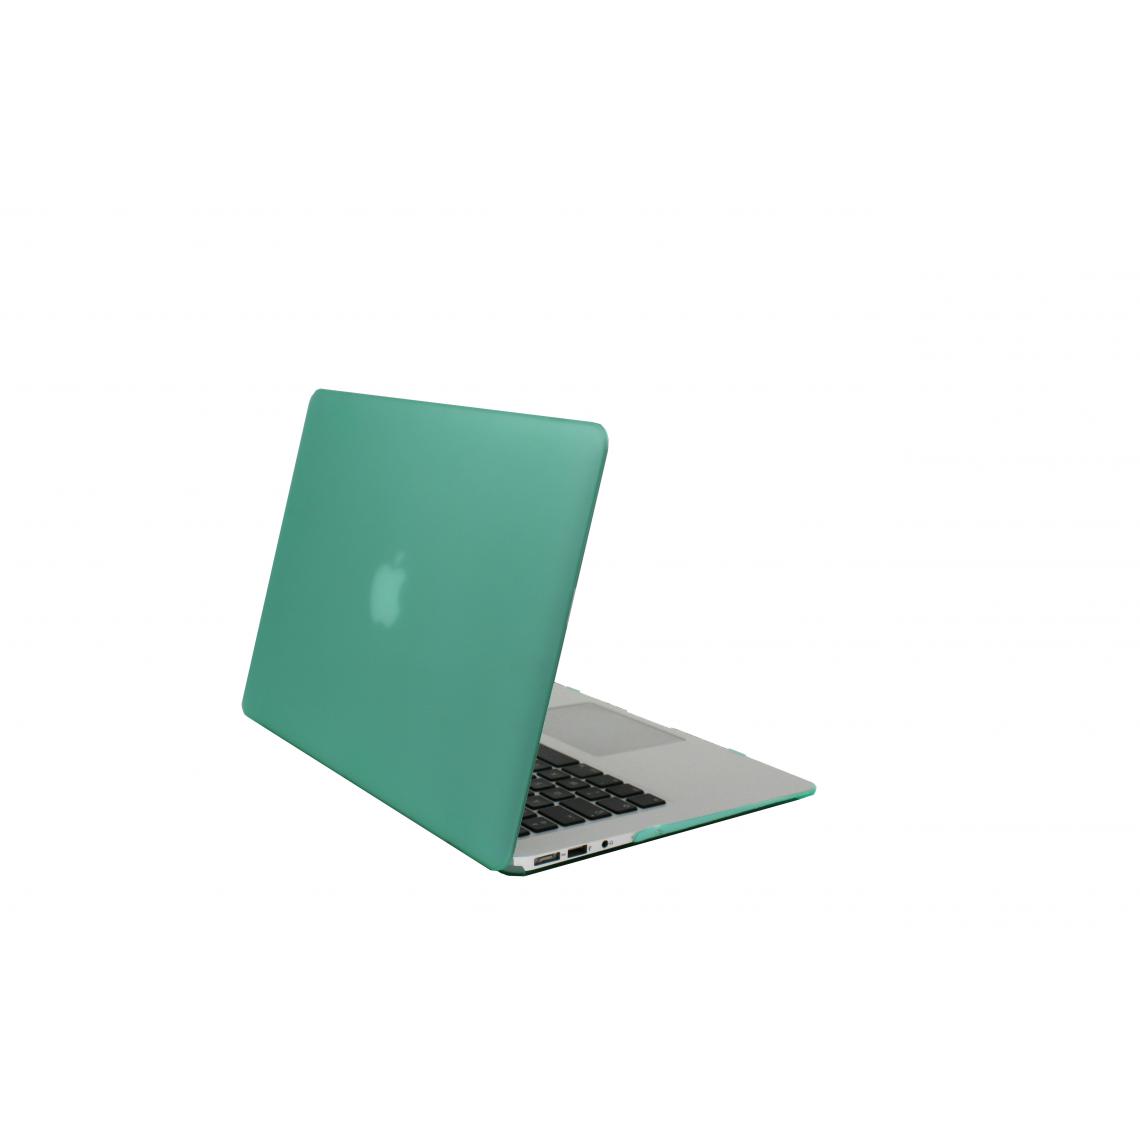 Apple - MacBook Air 13.3'' i5-5250U 4Go 128Go SSD - 2015 Coque Vert d'eau - MacBook